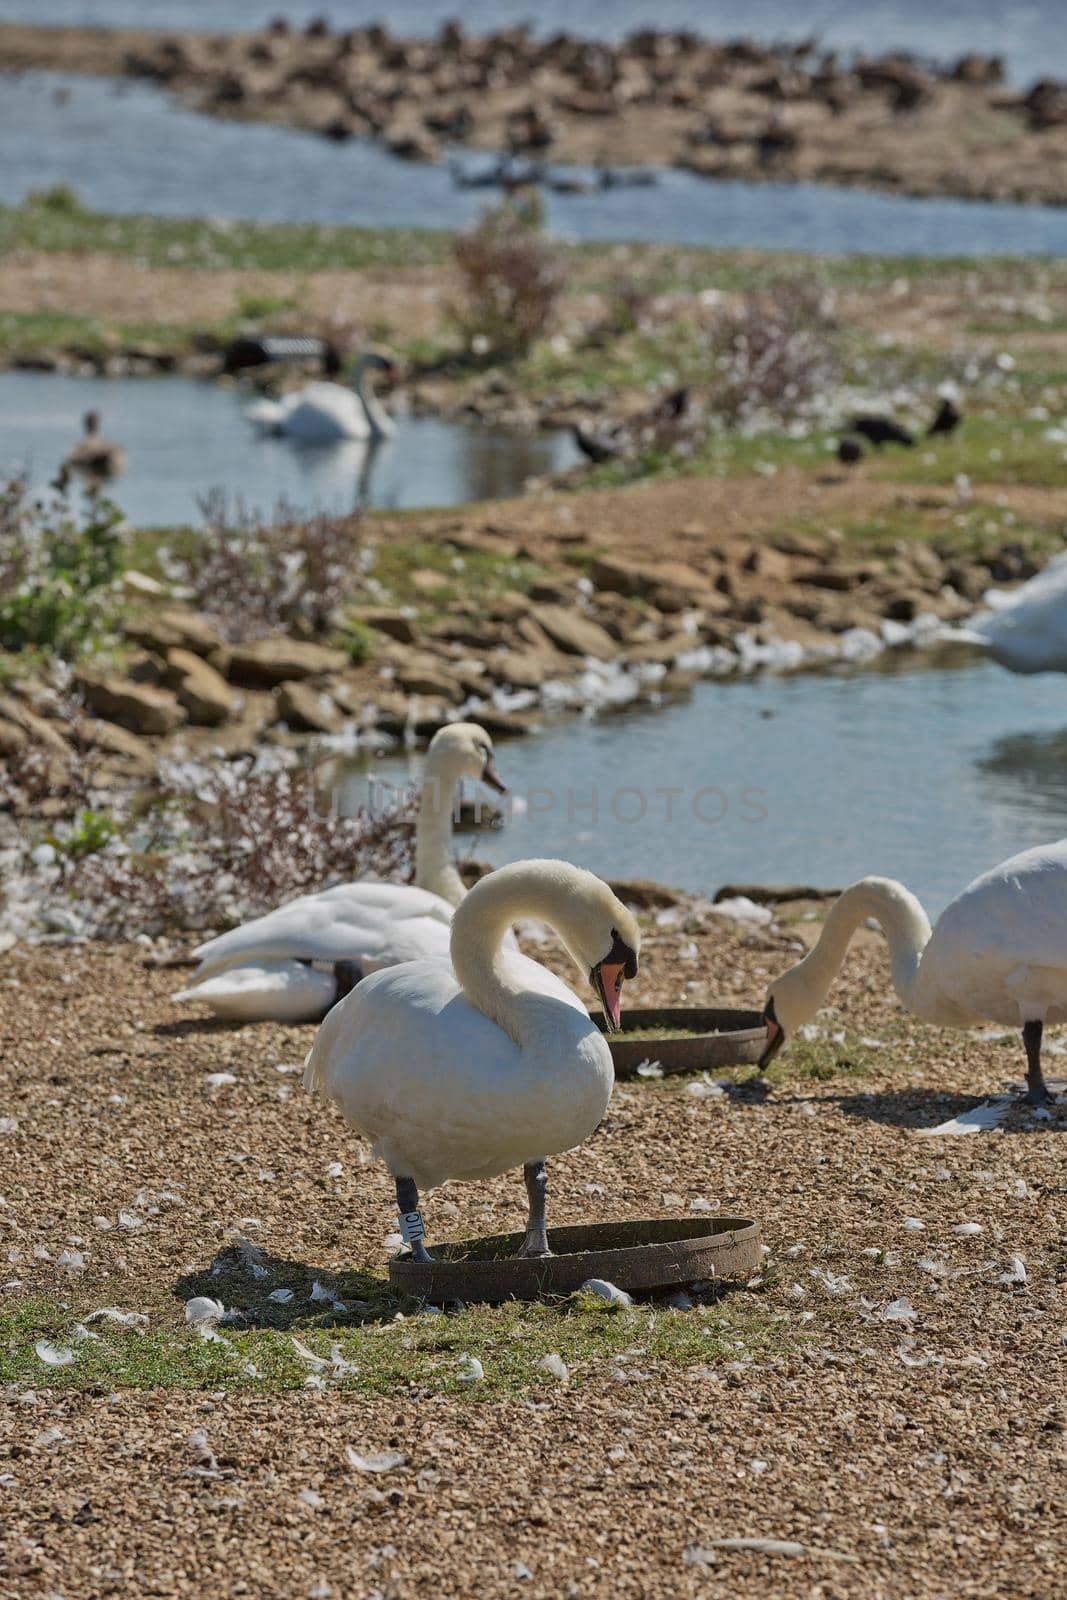 DORSET, ABBOTSBURY, UK - AUGUST 15, 2017: Flock of swans during feeding time at Abbotsbury swannery in Dorset, United Kingdom.